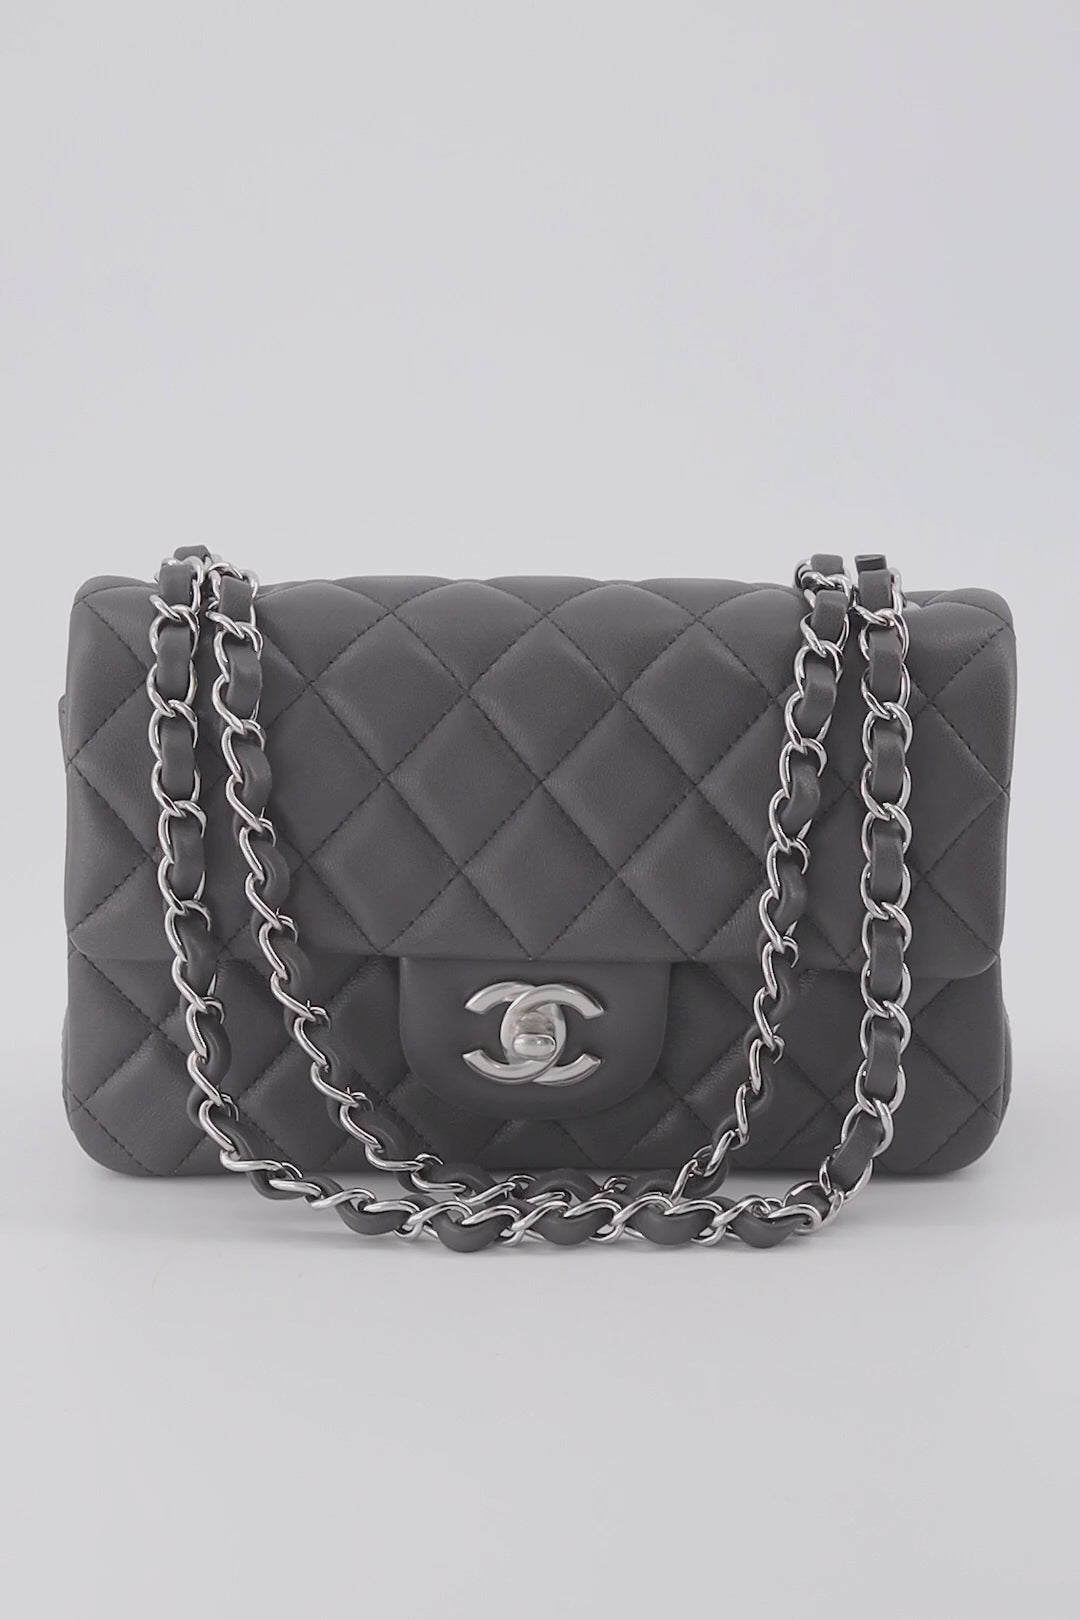 Chanel Mini Rectangular Flap Bag Dark Grey Colour